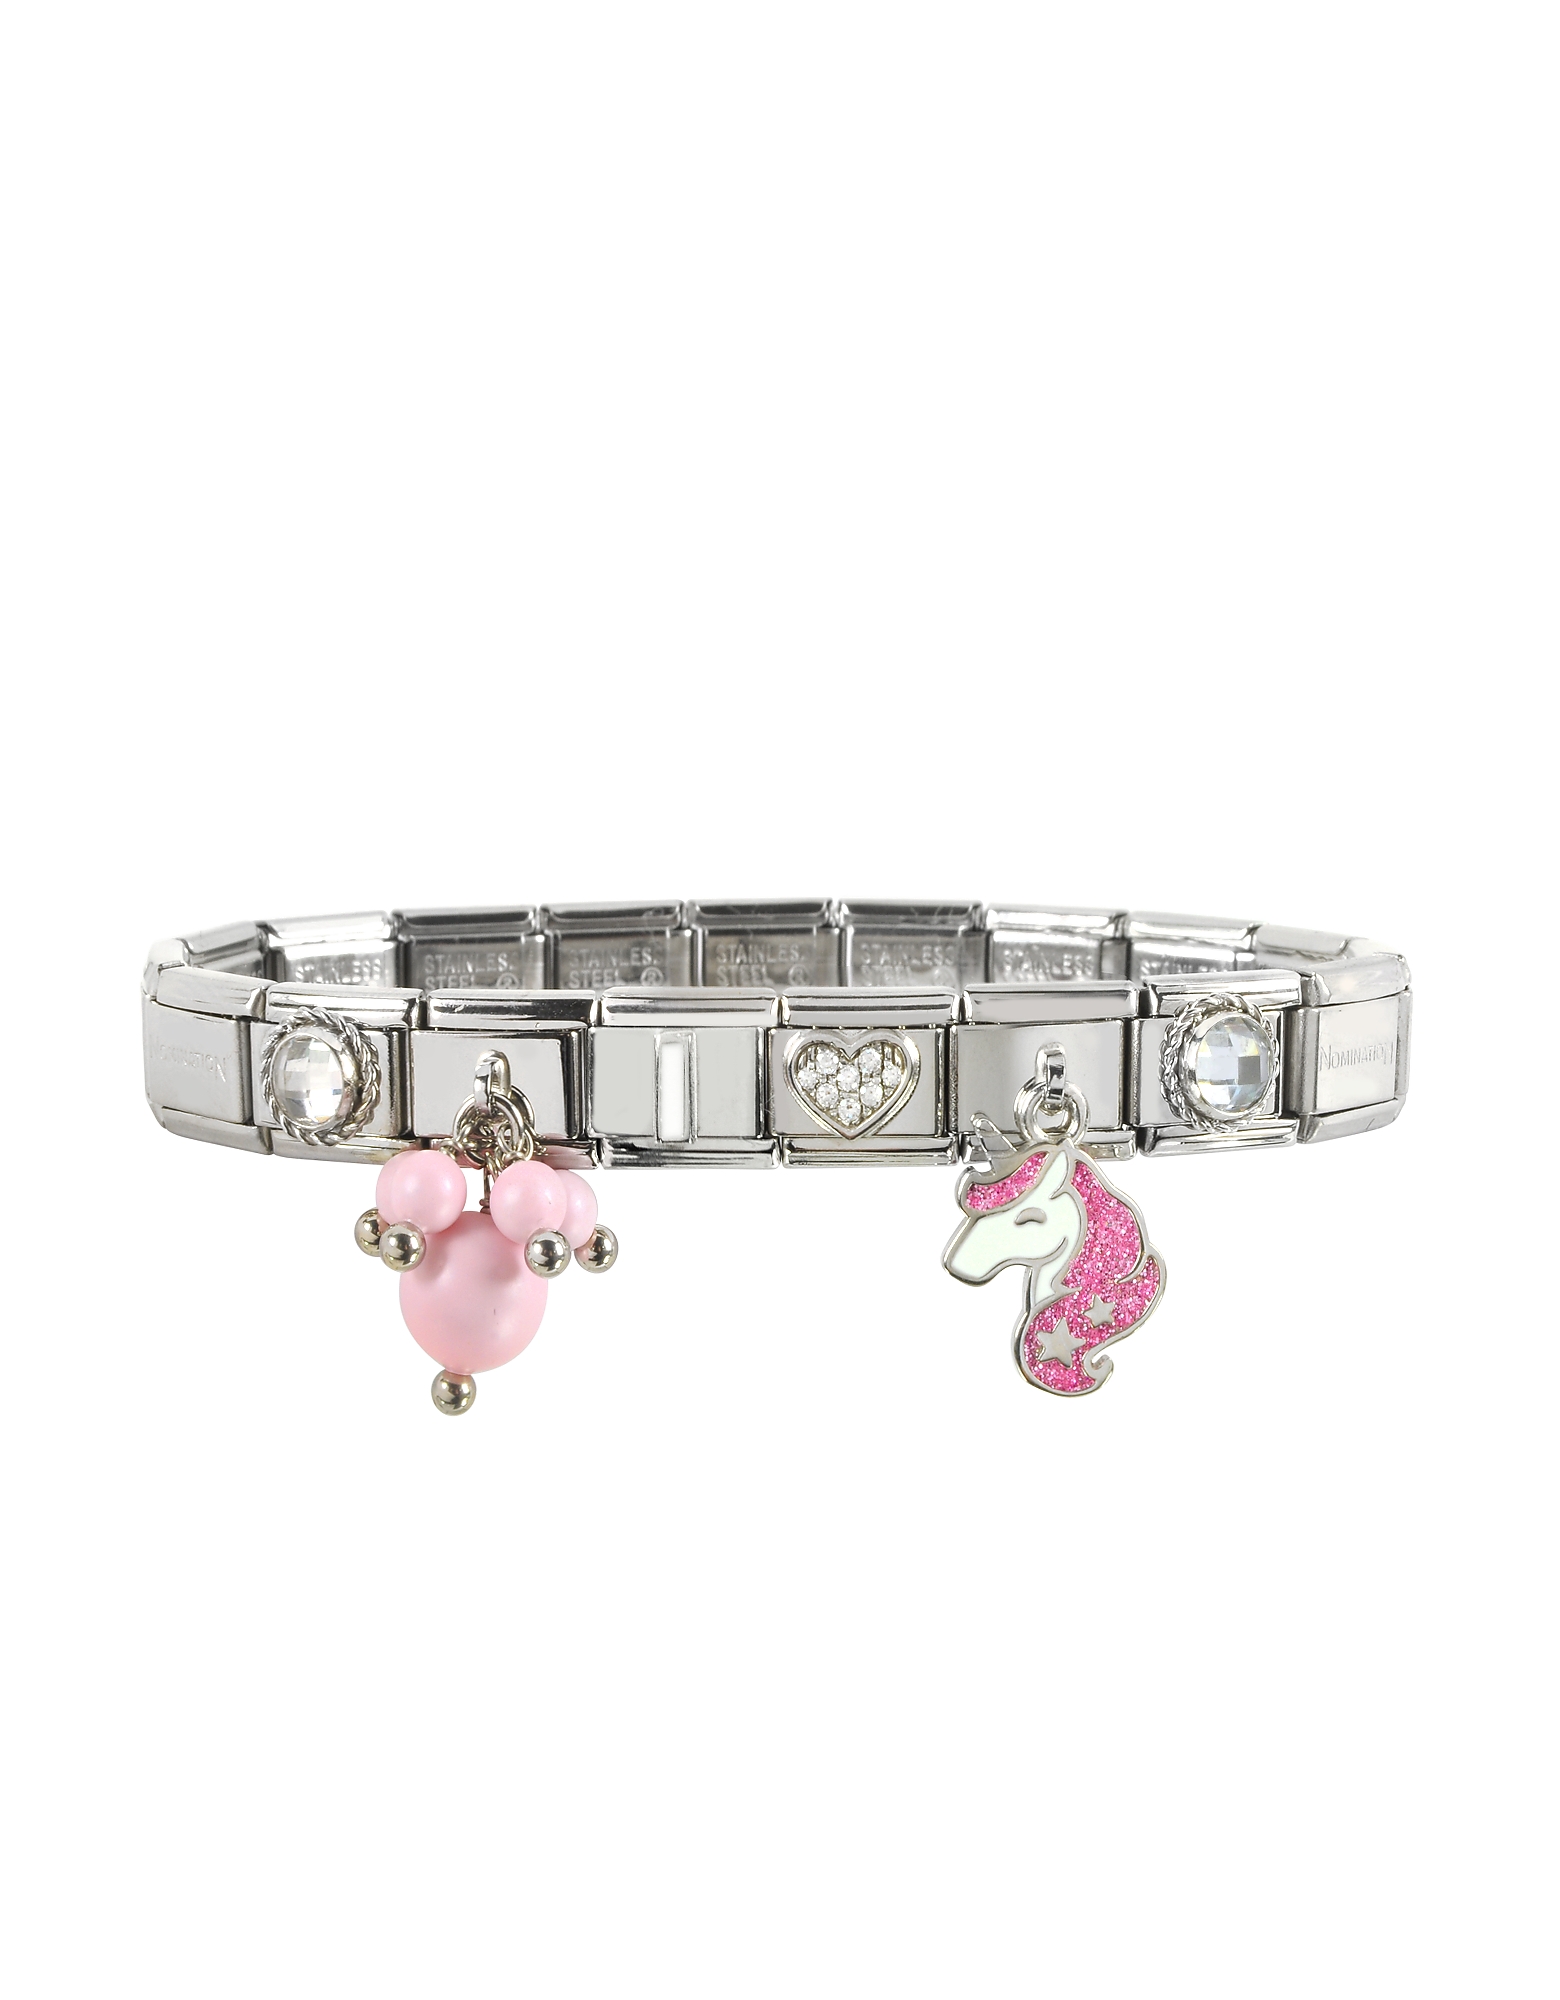 Nomination Bracelets Pink Unicorn Sterling Silver & Stainless Steel Bracelet